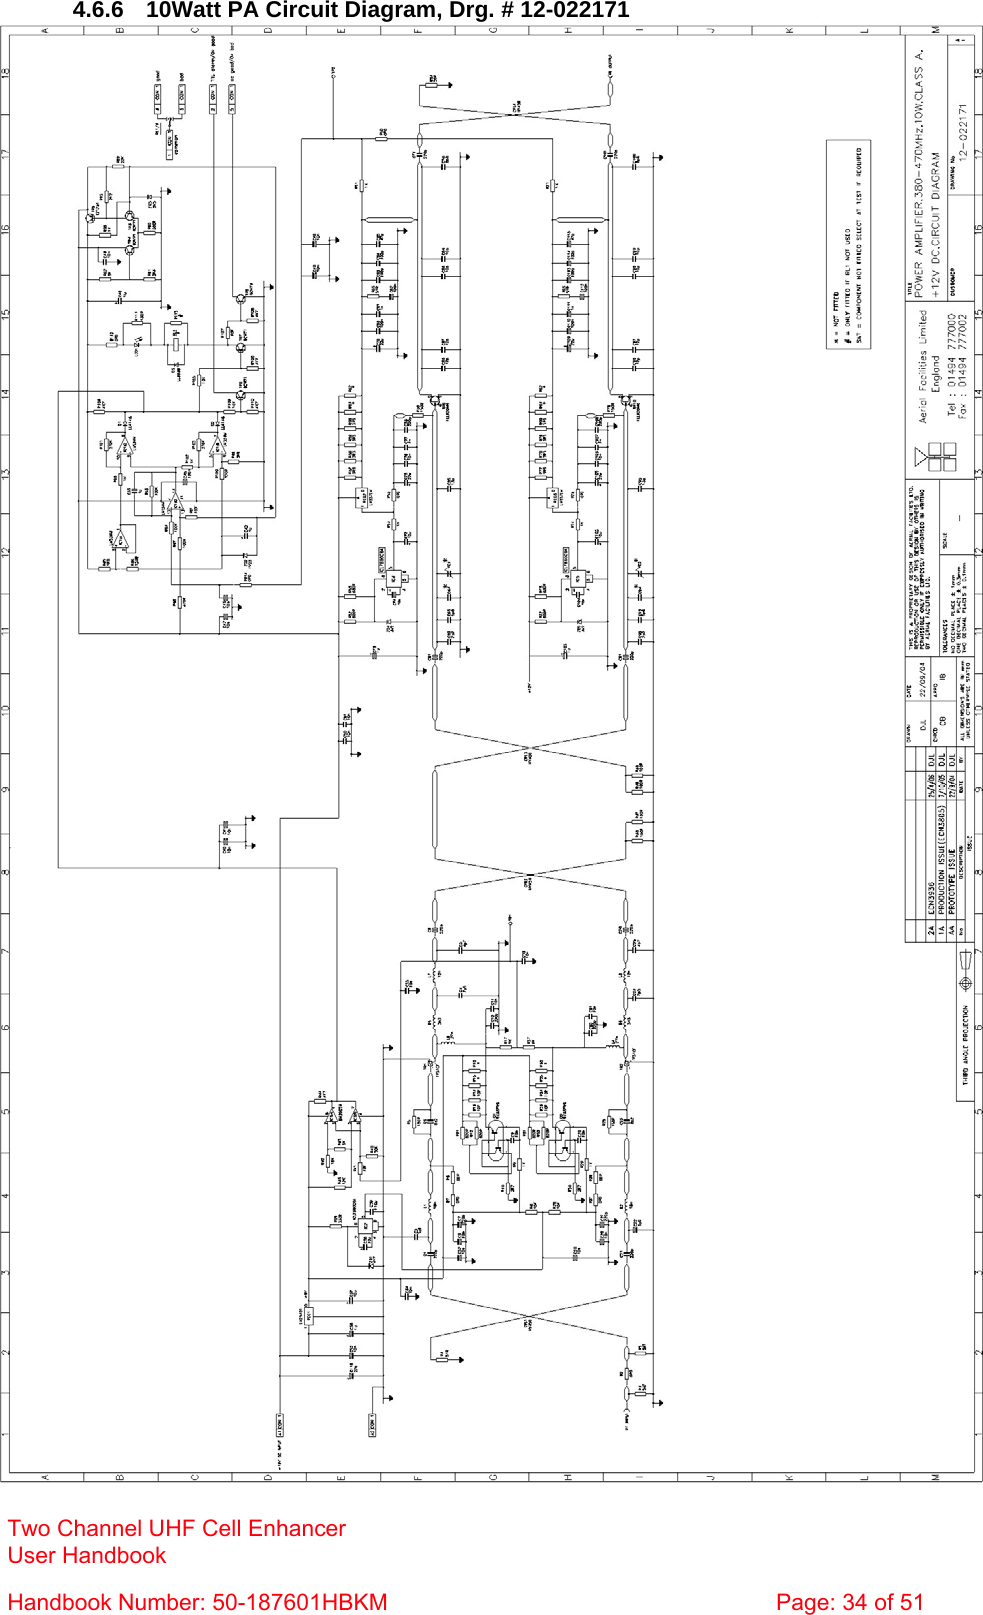  4.6.6  10Watt PA Circuit Diagram, Drg. # 12-022171  Two Channel UHF Cell Enhancer User Handbook Handbook Number: 50-187601HBKM  Page: 34 of 51  